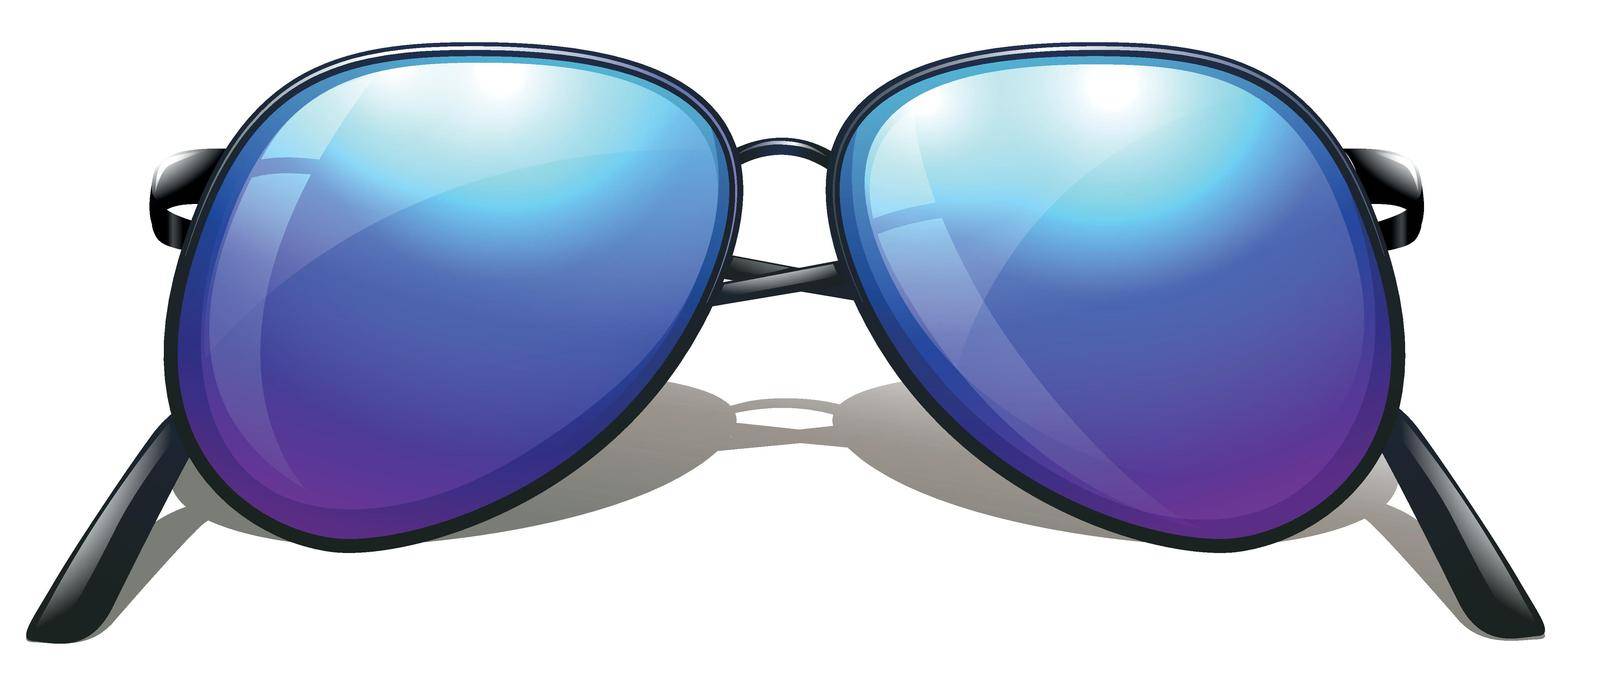 Illustration of a close up sunglasses